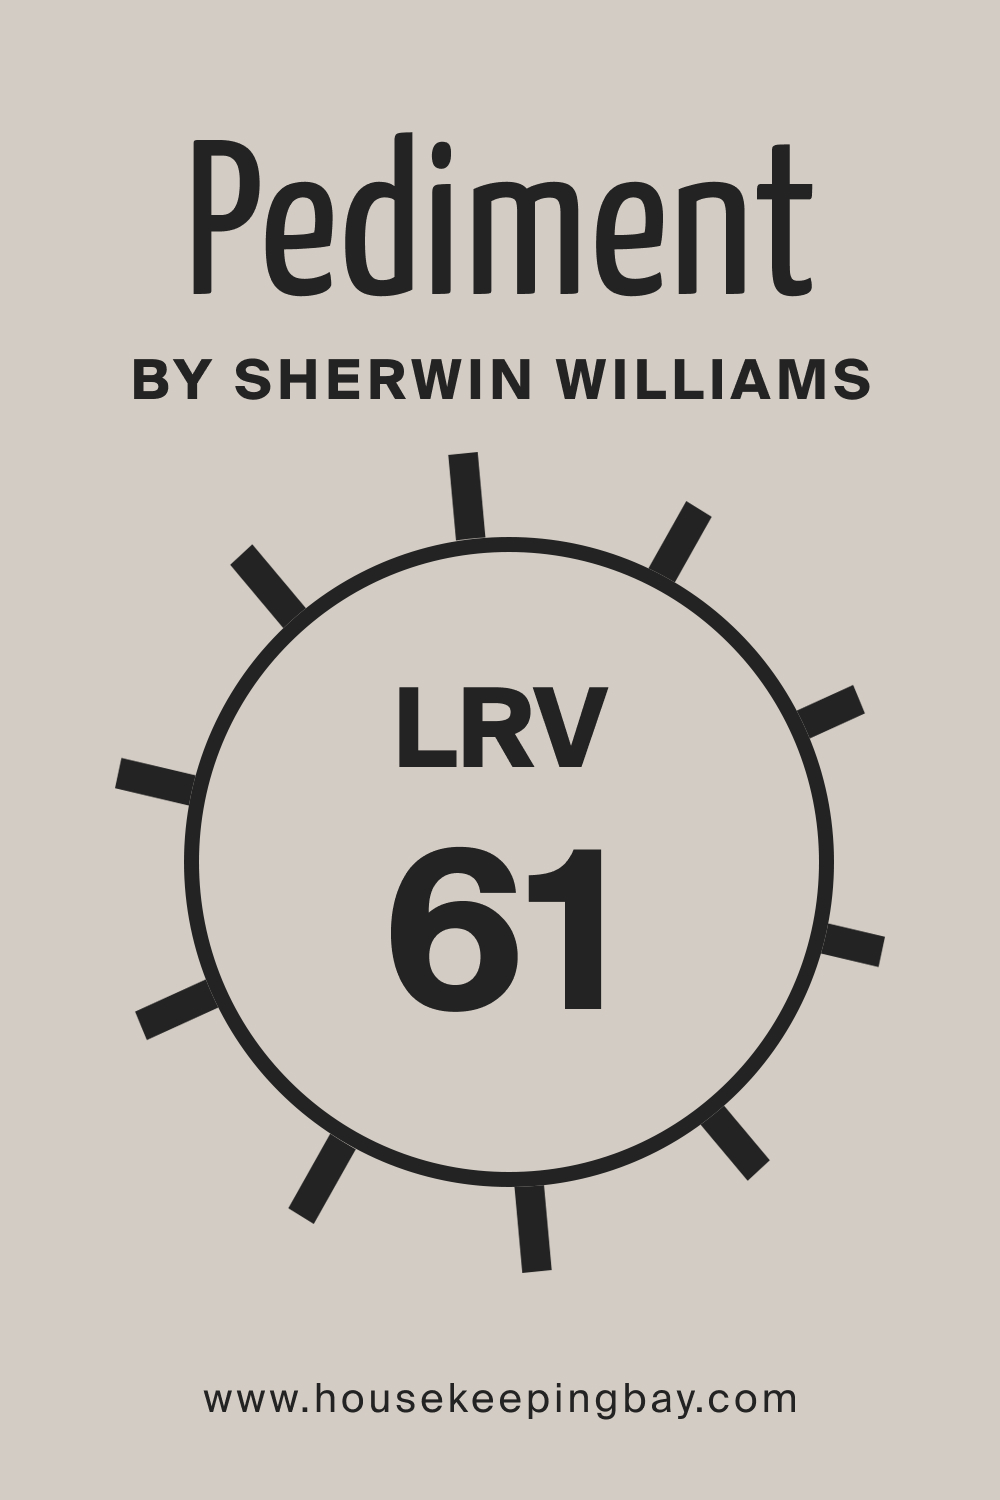 Pediment SW 7634 by Sherwin Williams. LRV 61